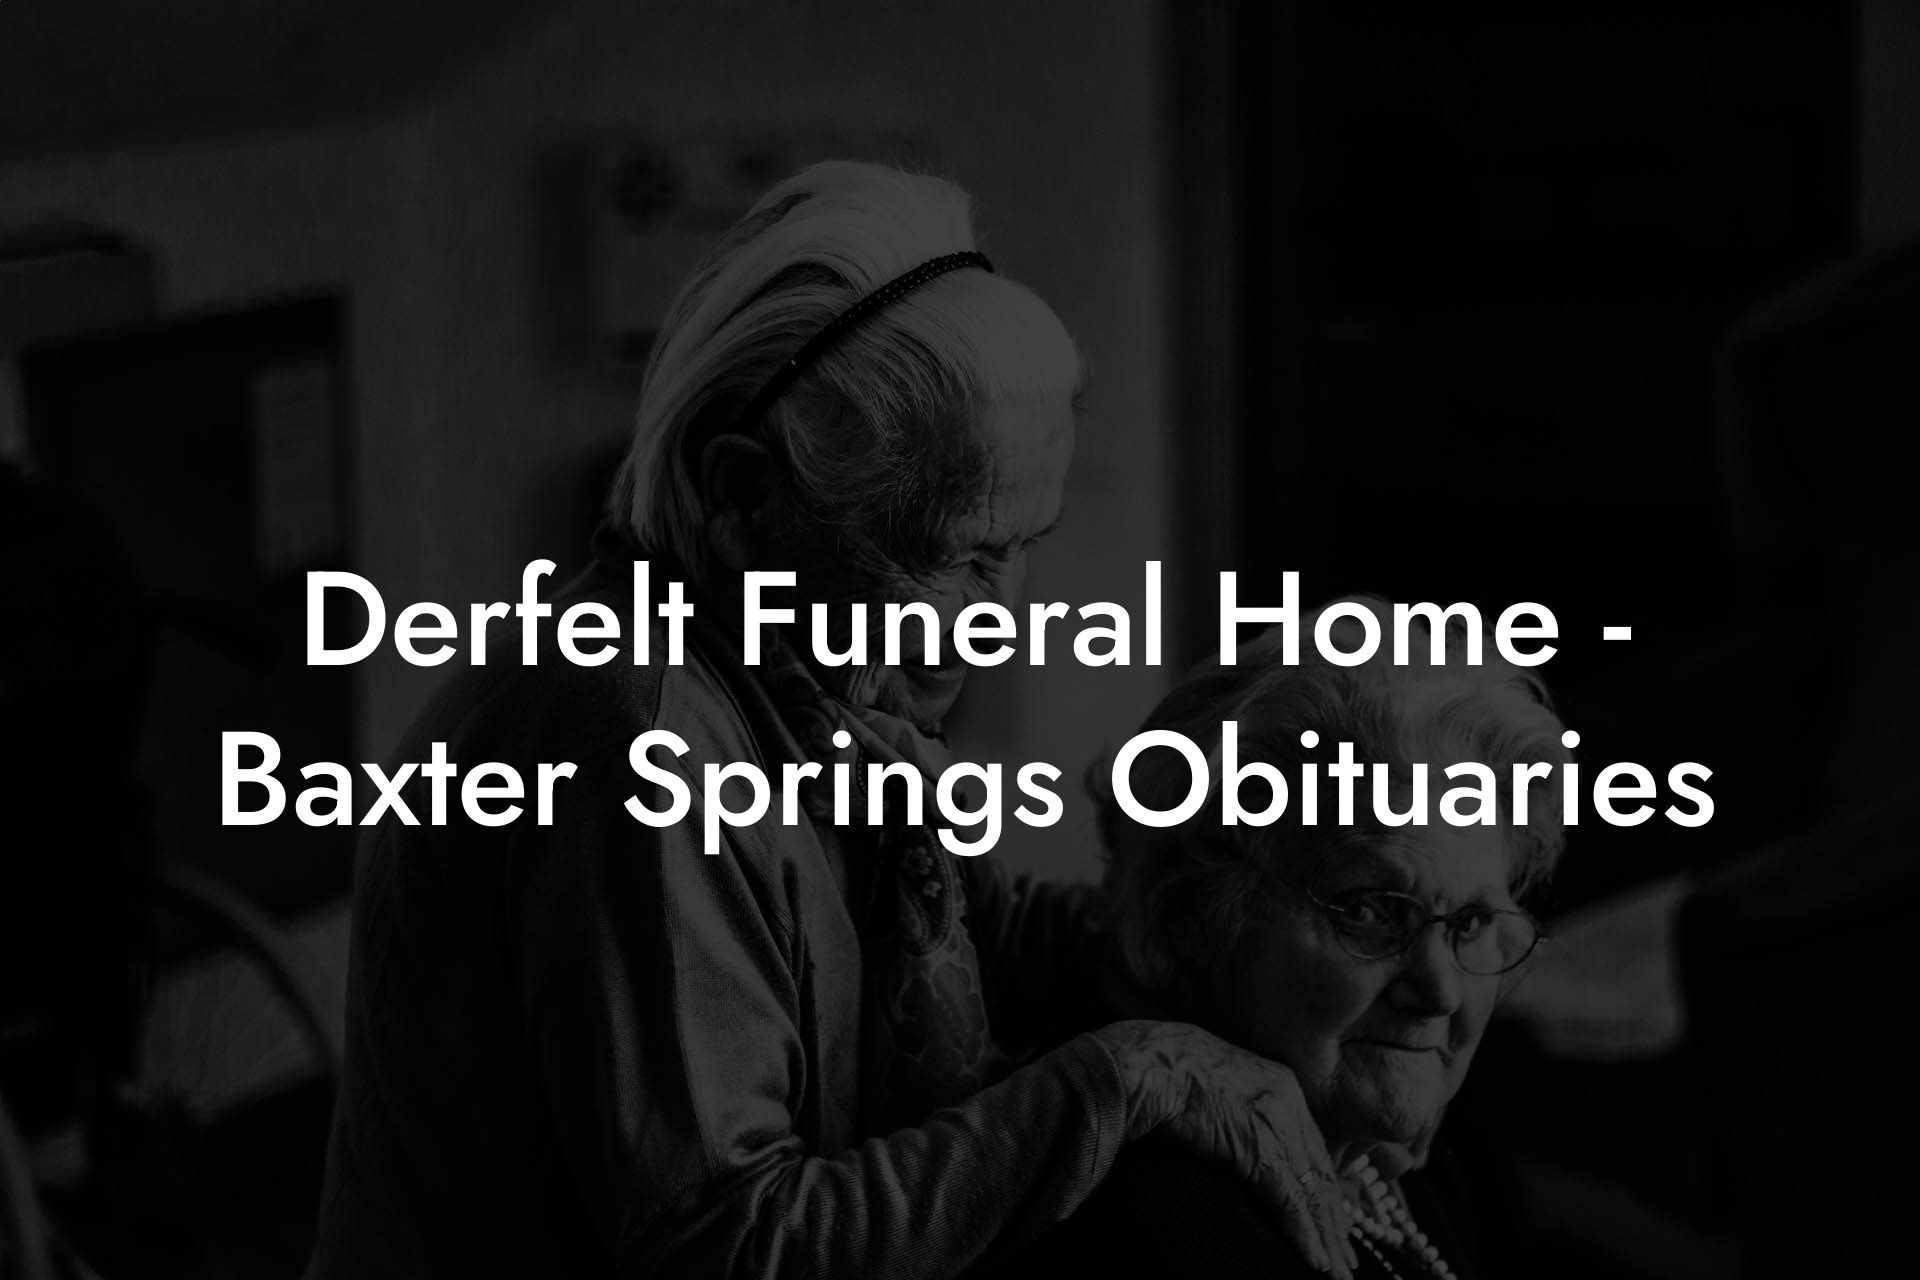 Derfelt Funeral Home - Baxter Springs Obituaries